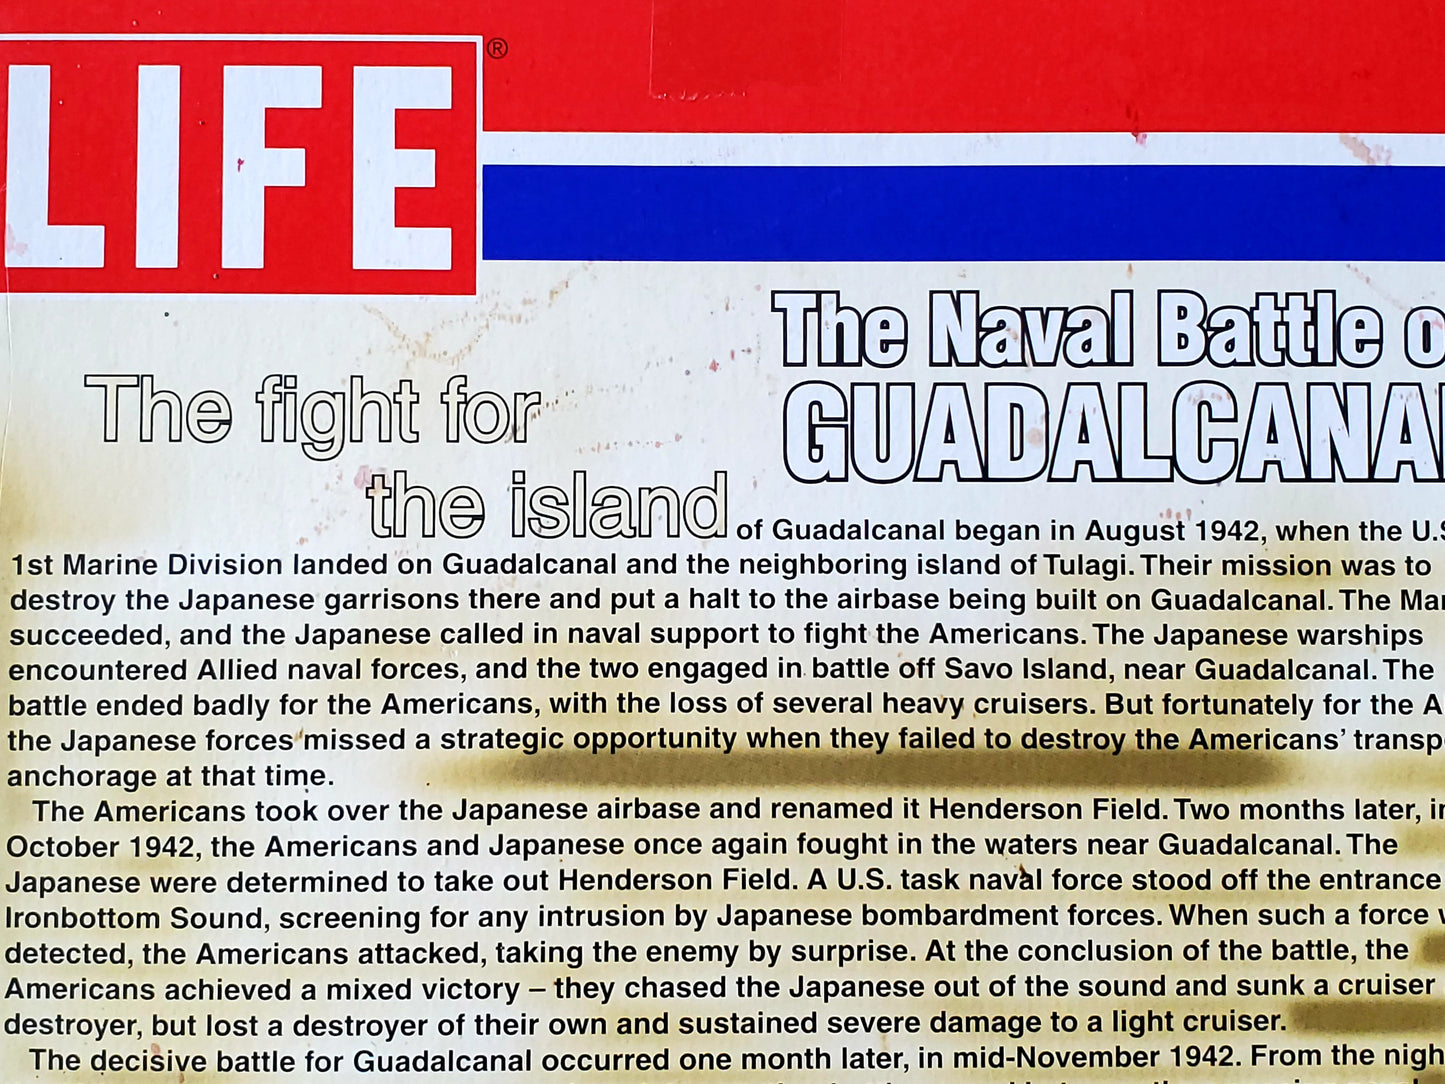 G.I. Joe Life Historical Editions The Battle of Okinawa